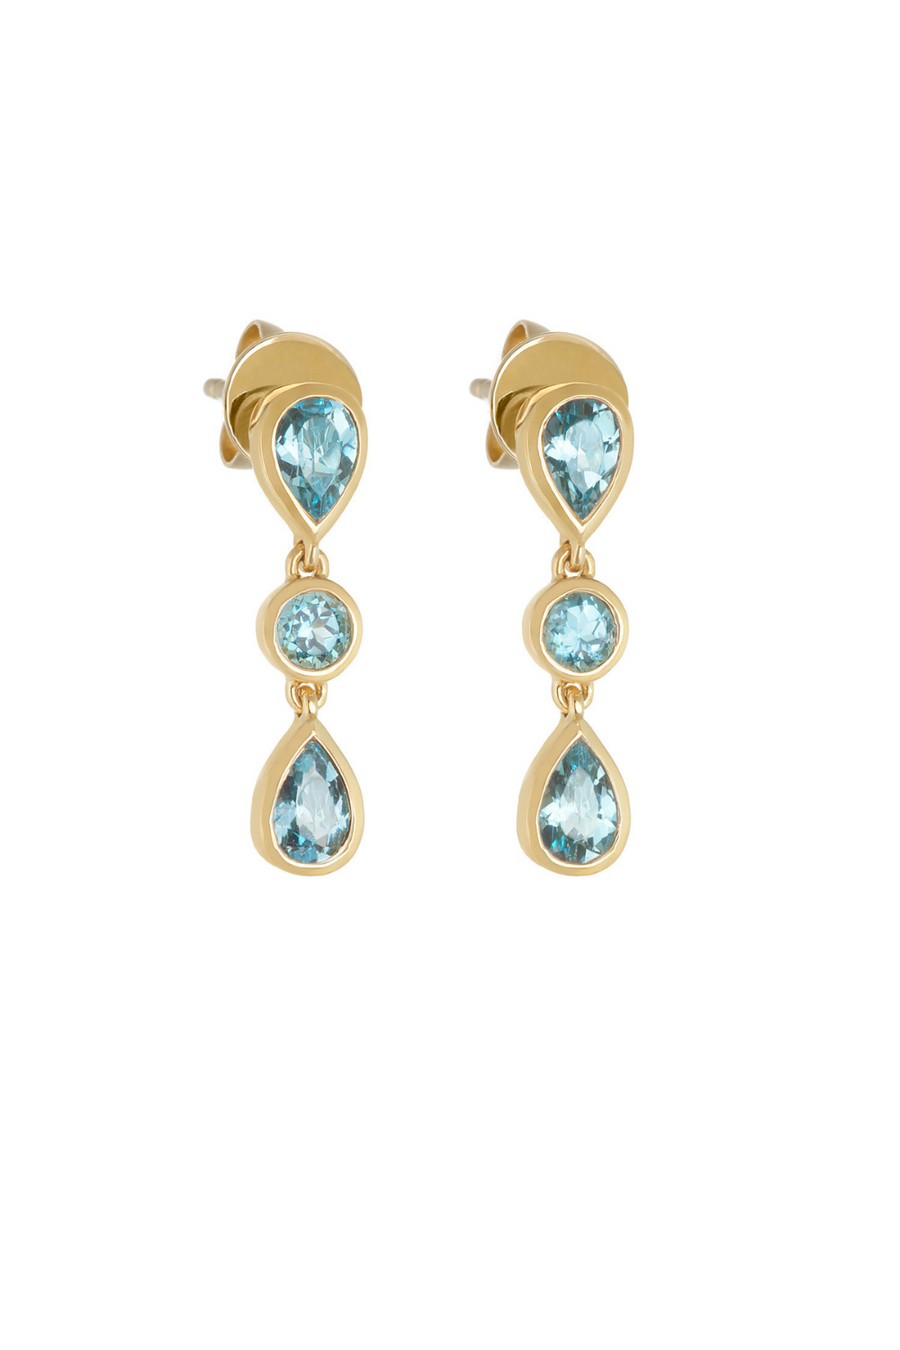 Blue Topaz Classic 'Raindrop' Earrings in 18k Gold